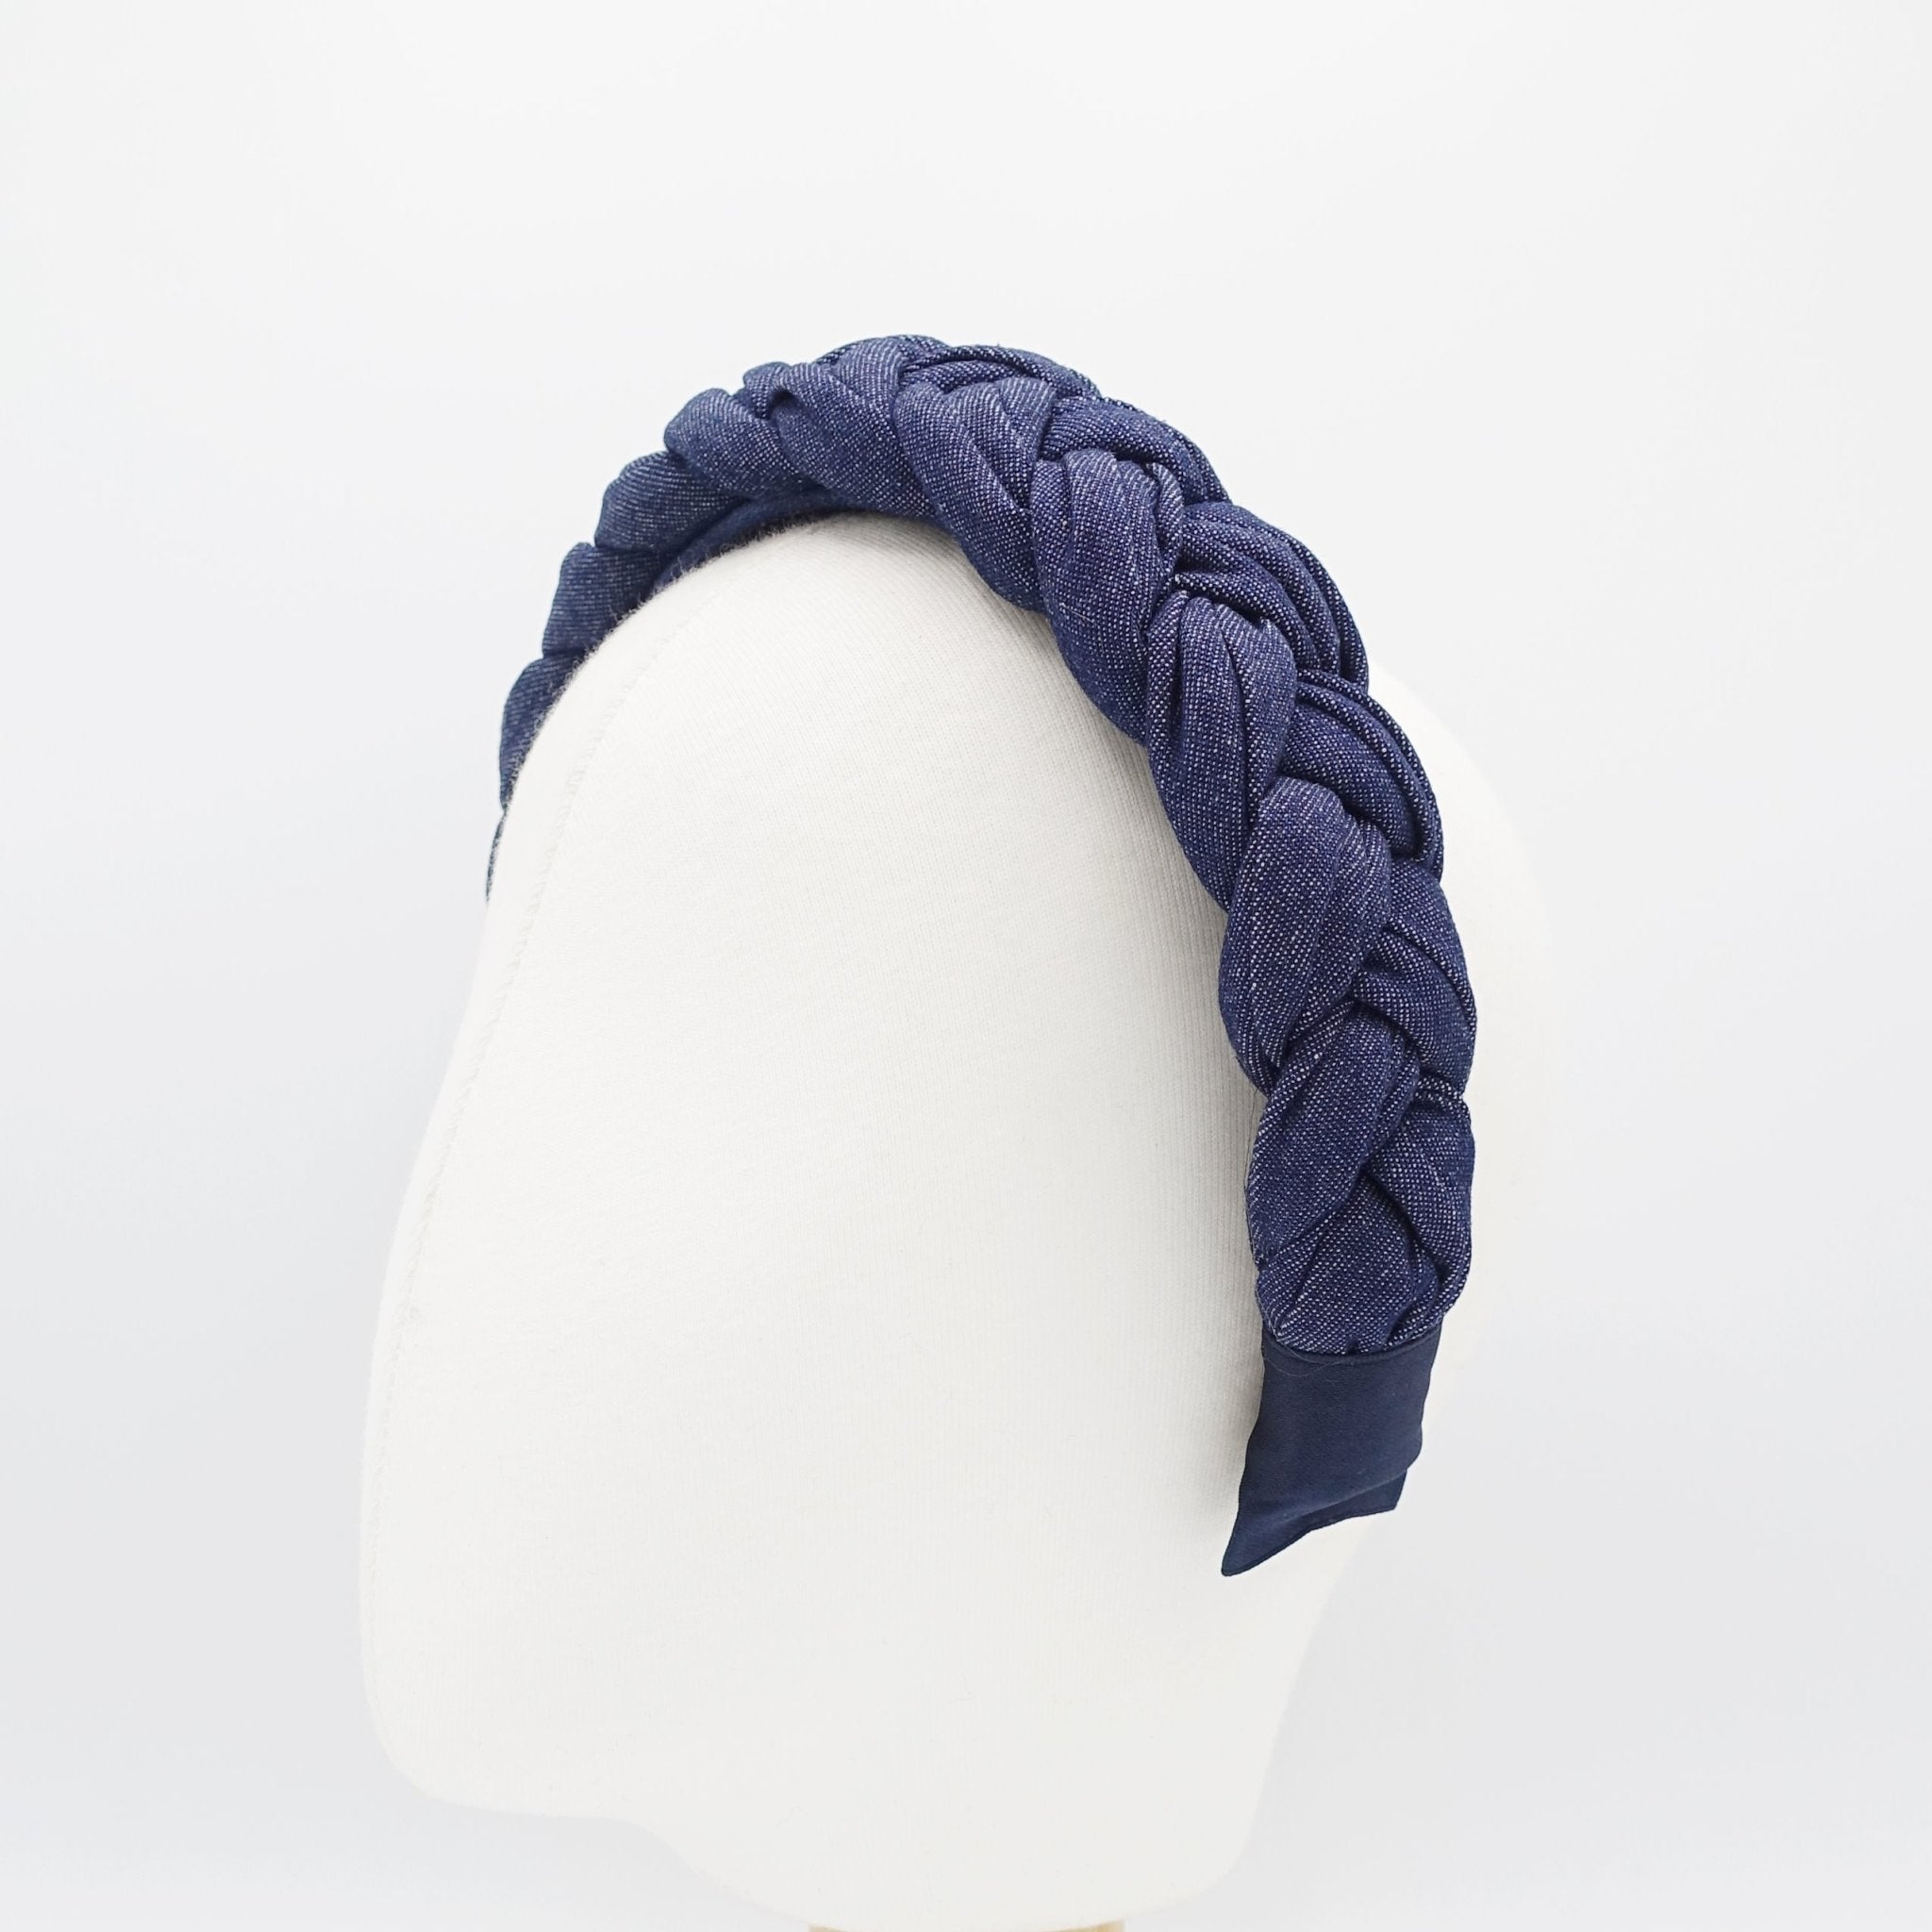 veryshine.com hairband/headband denim braided headband stylish casual hairband